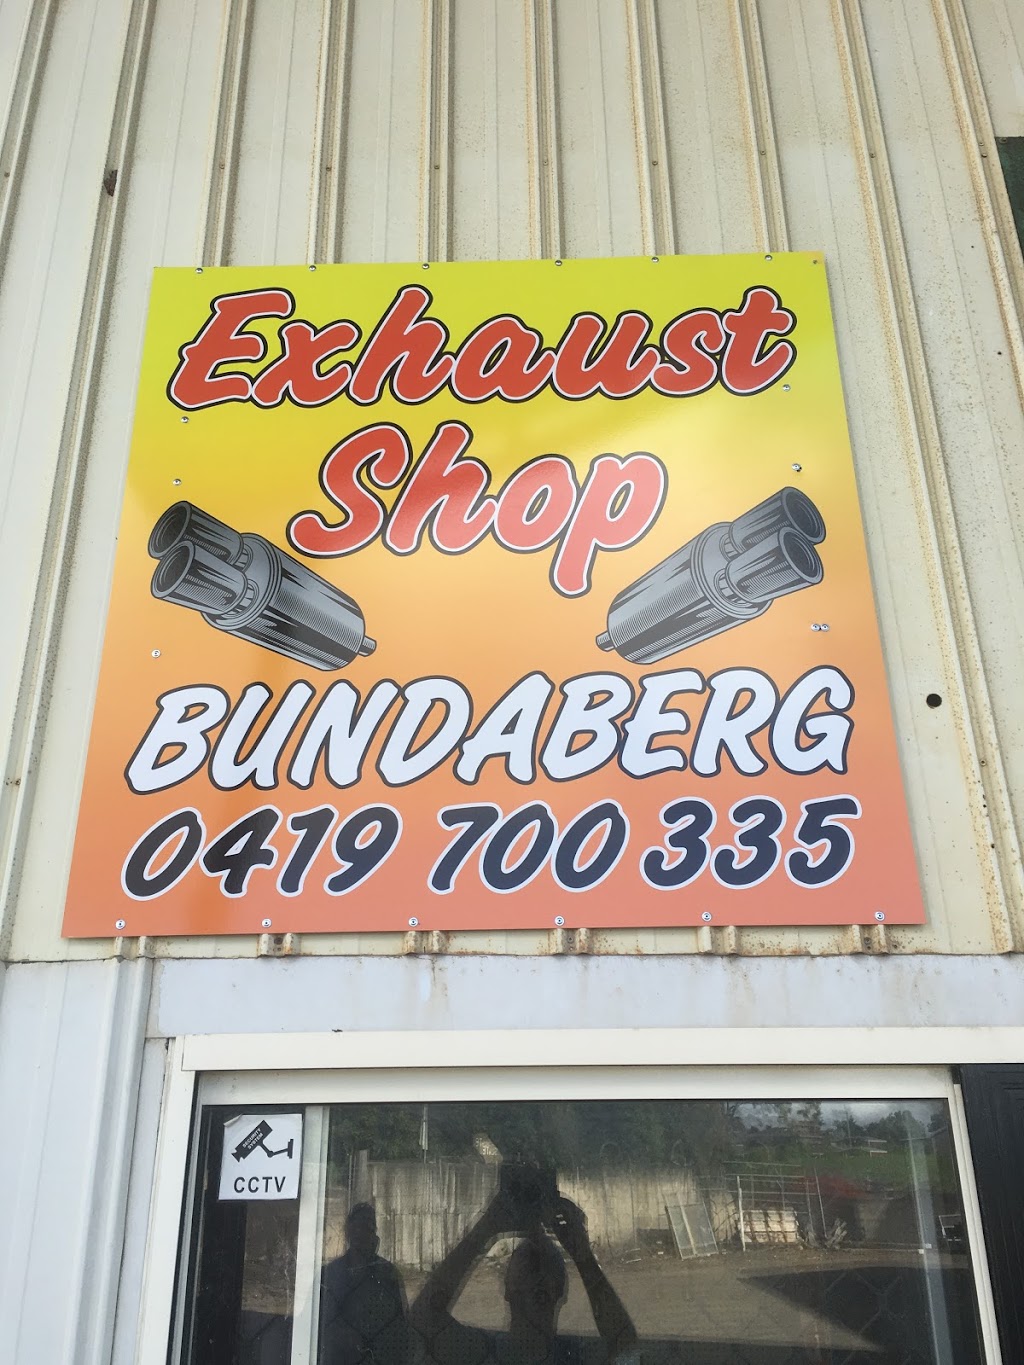 Exhaust Shop Bundaberg | car repair | 1/173 Avoca Rd, Avoca QLD 4670, Australia | 0419700335 OR +61 419 700 335